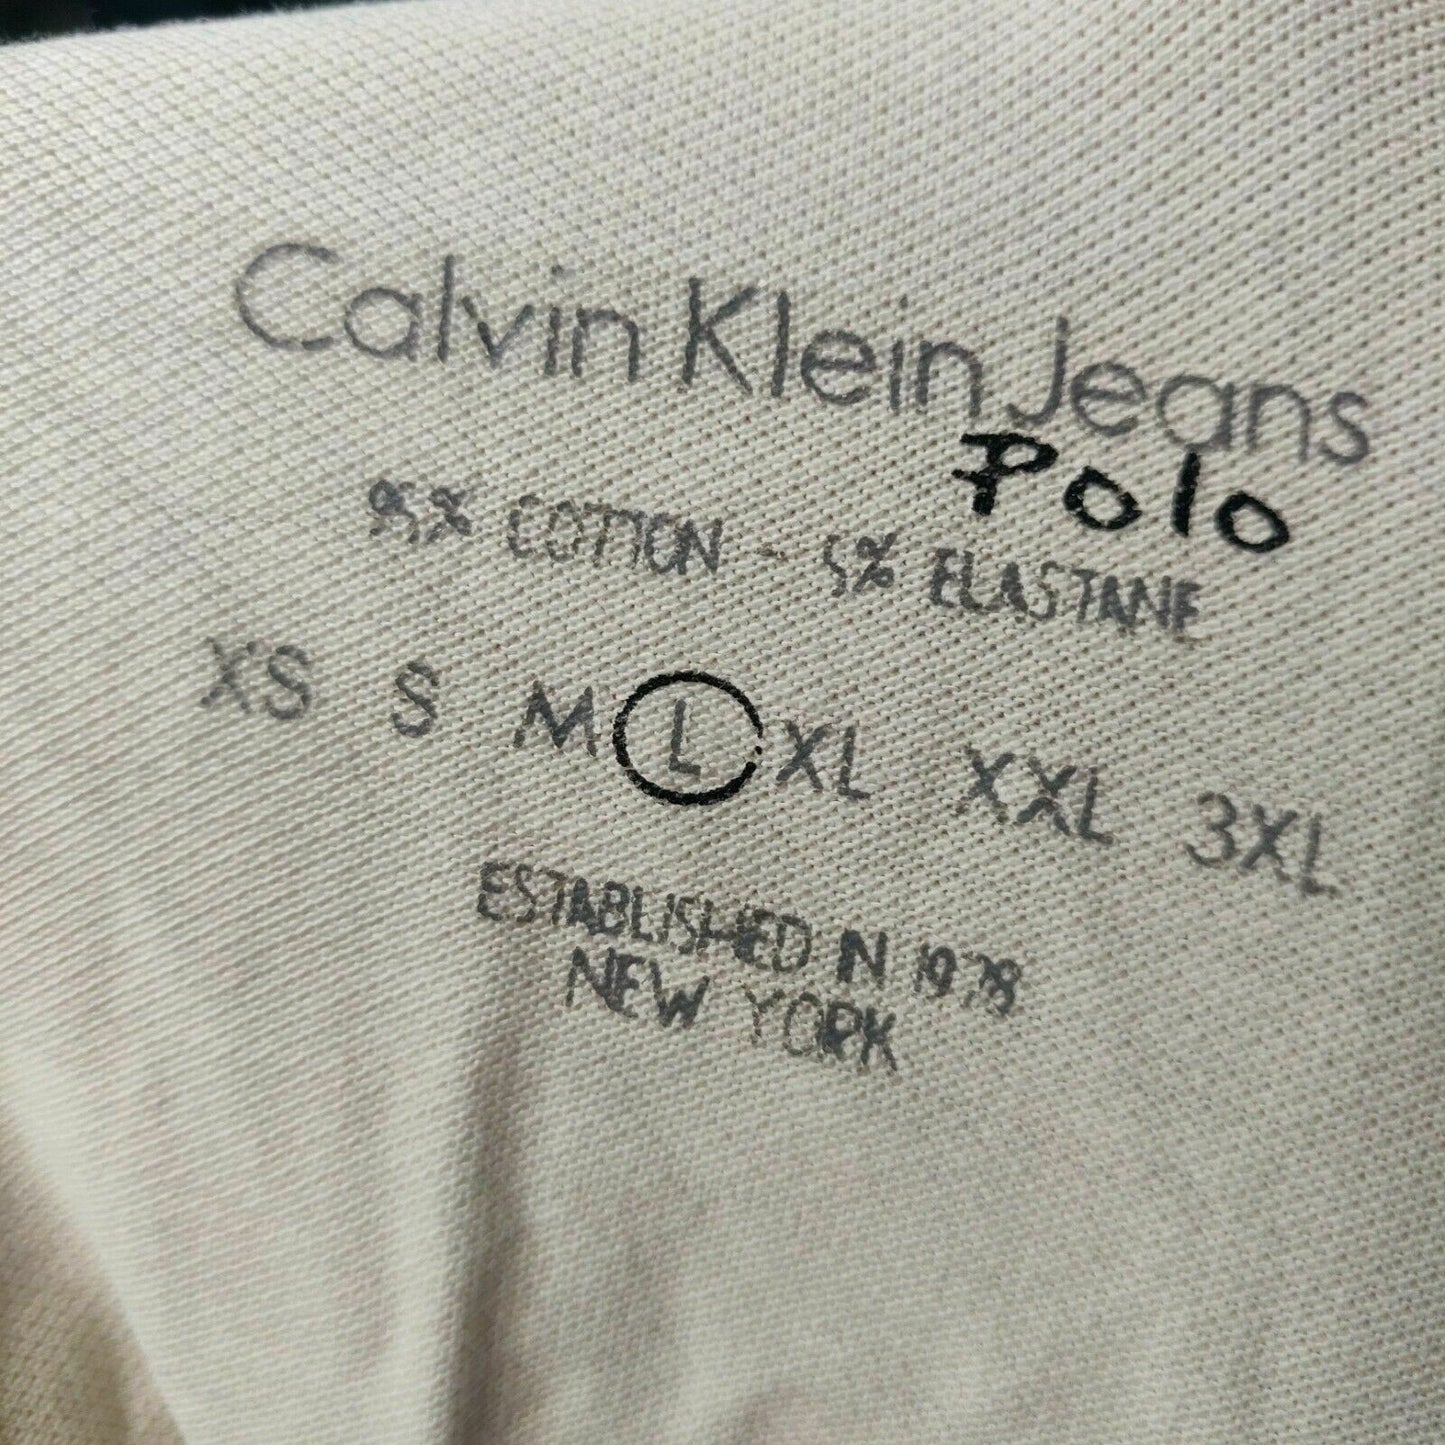 Calvin Klein Jeans White Polo Shirt 1/4 Button Men Size Large